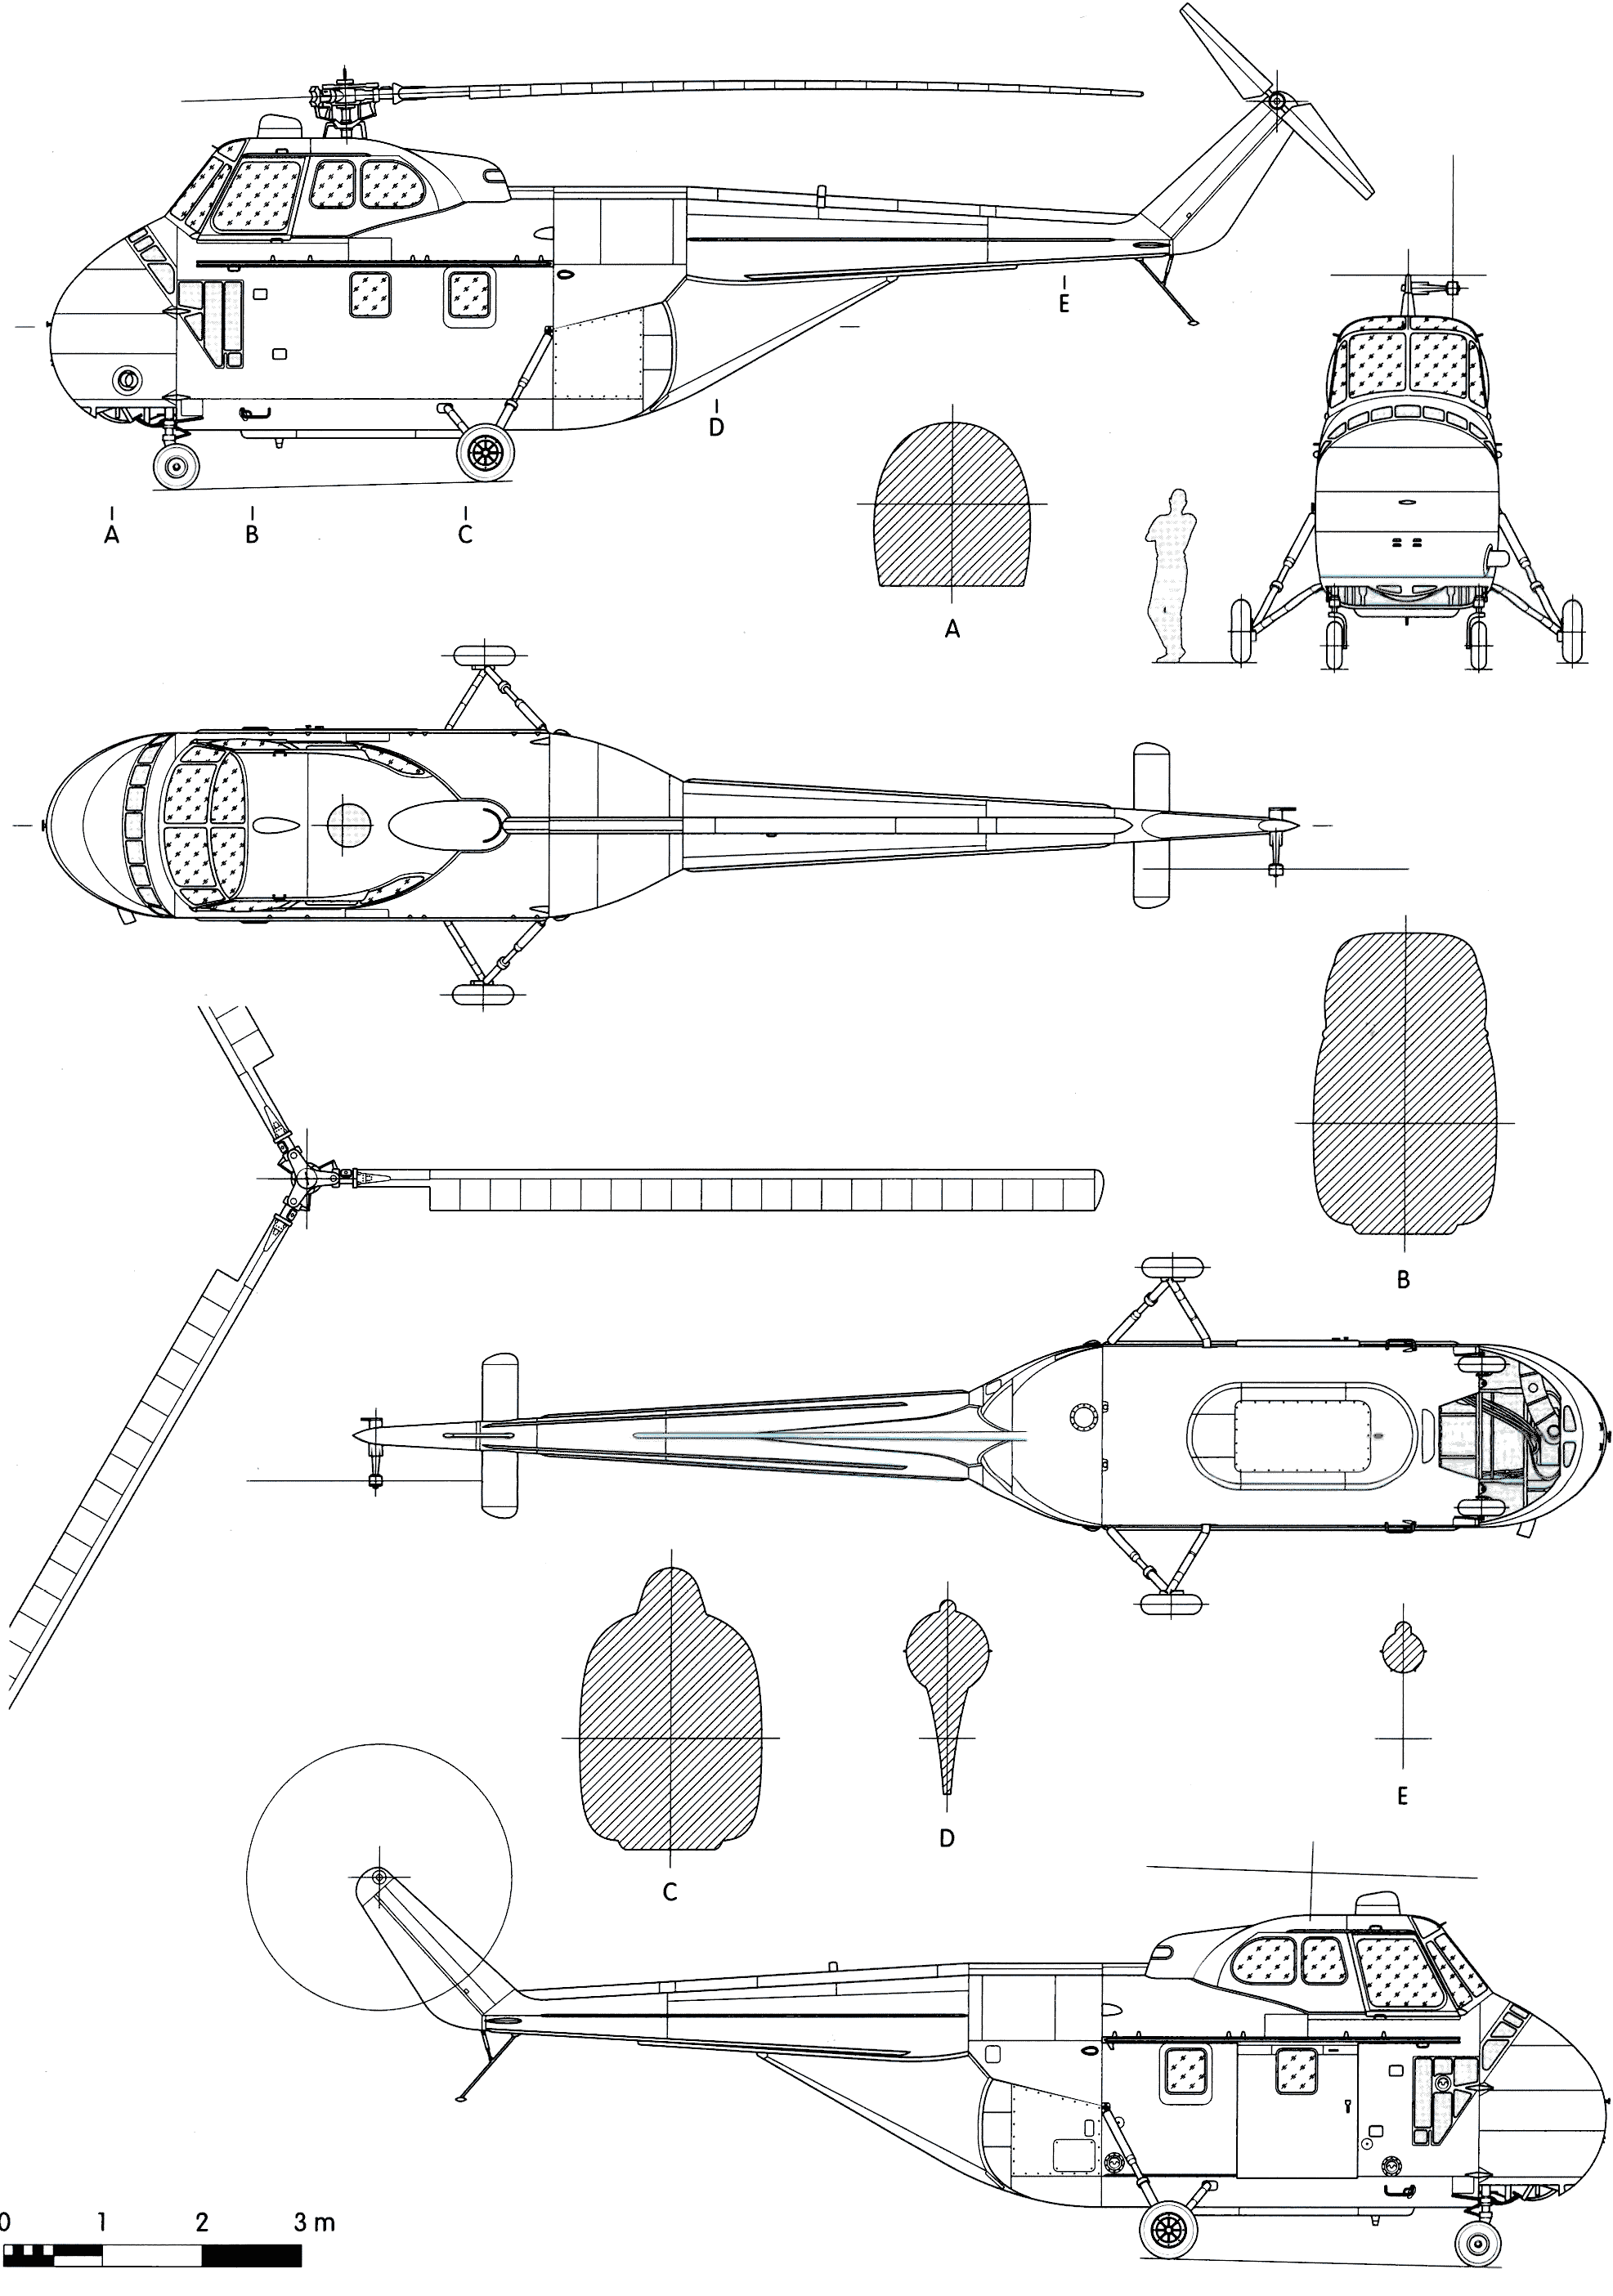 H-19 Chickasaw blueprint